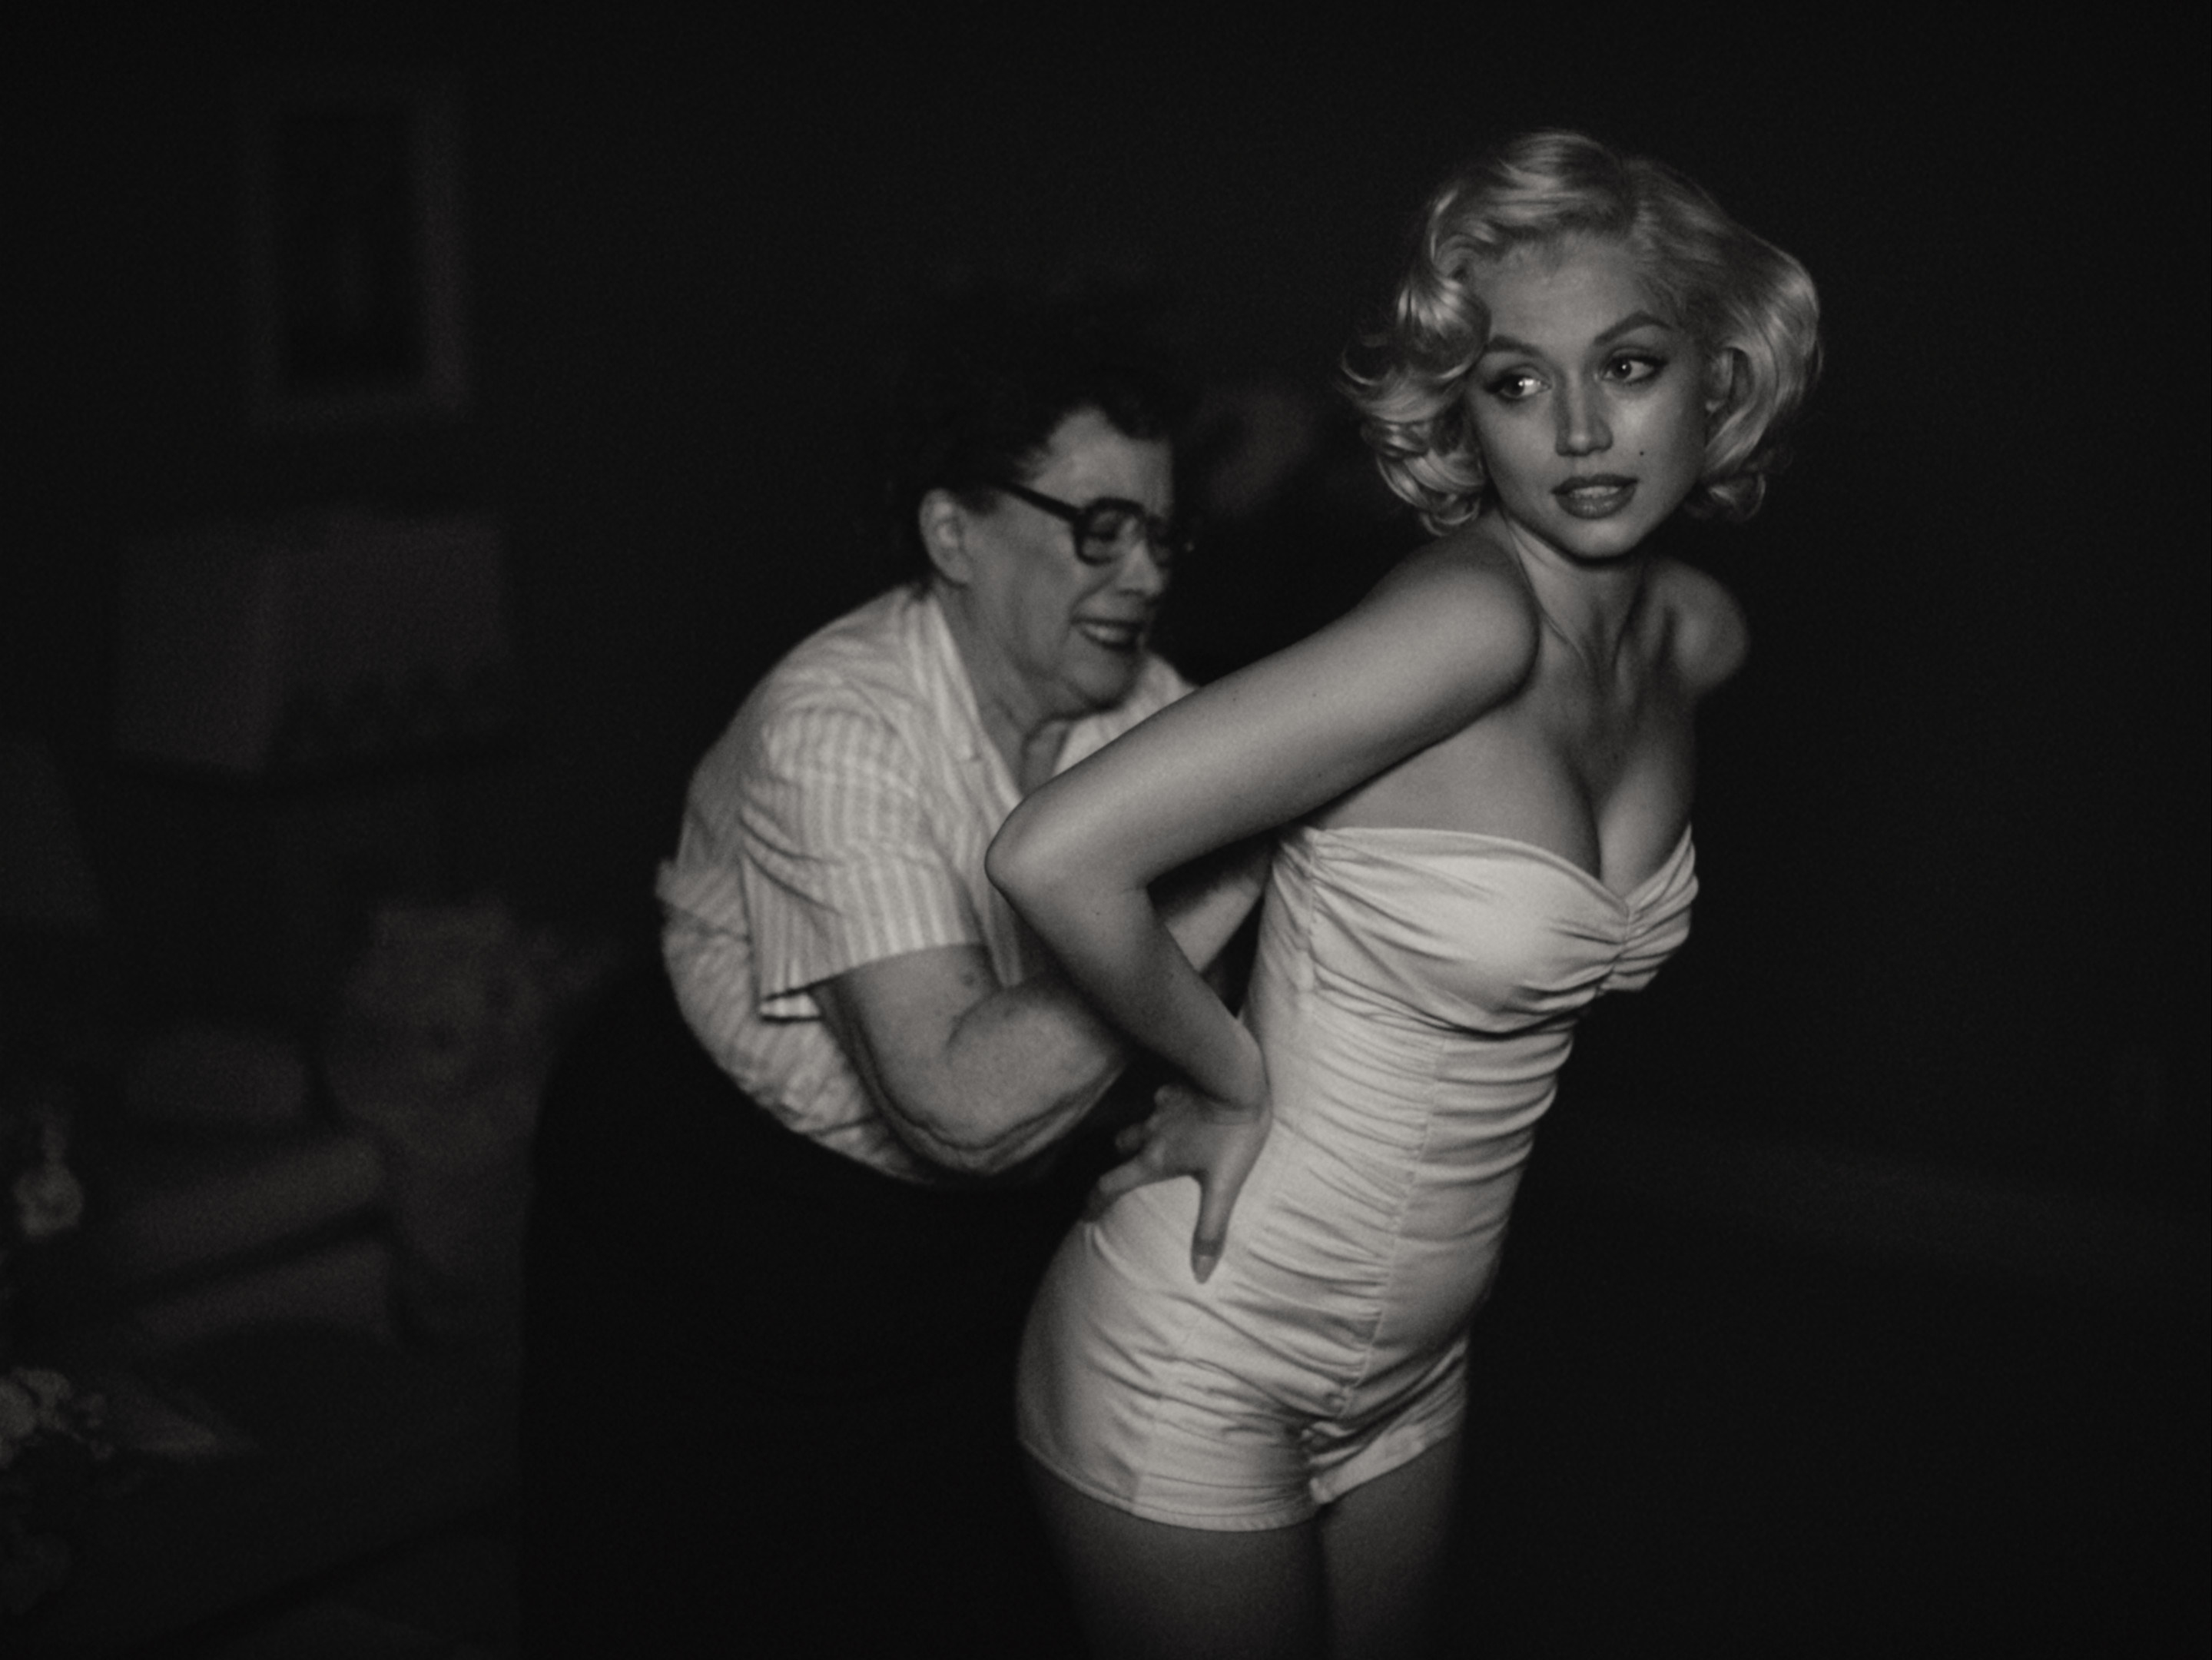 Ana de Armas as Marilyn Monroe being tucked into a bodysuit